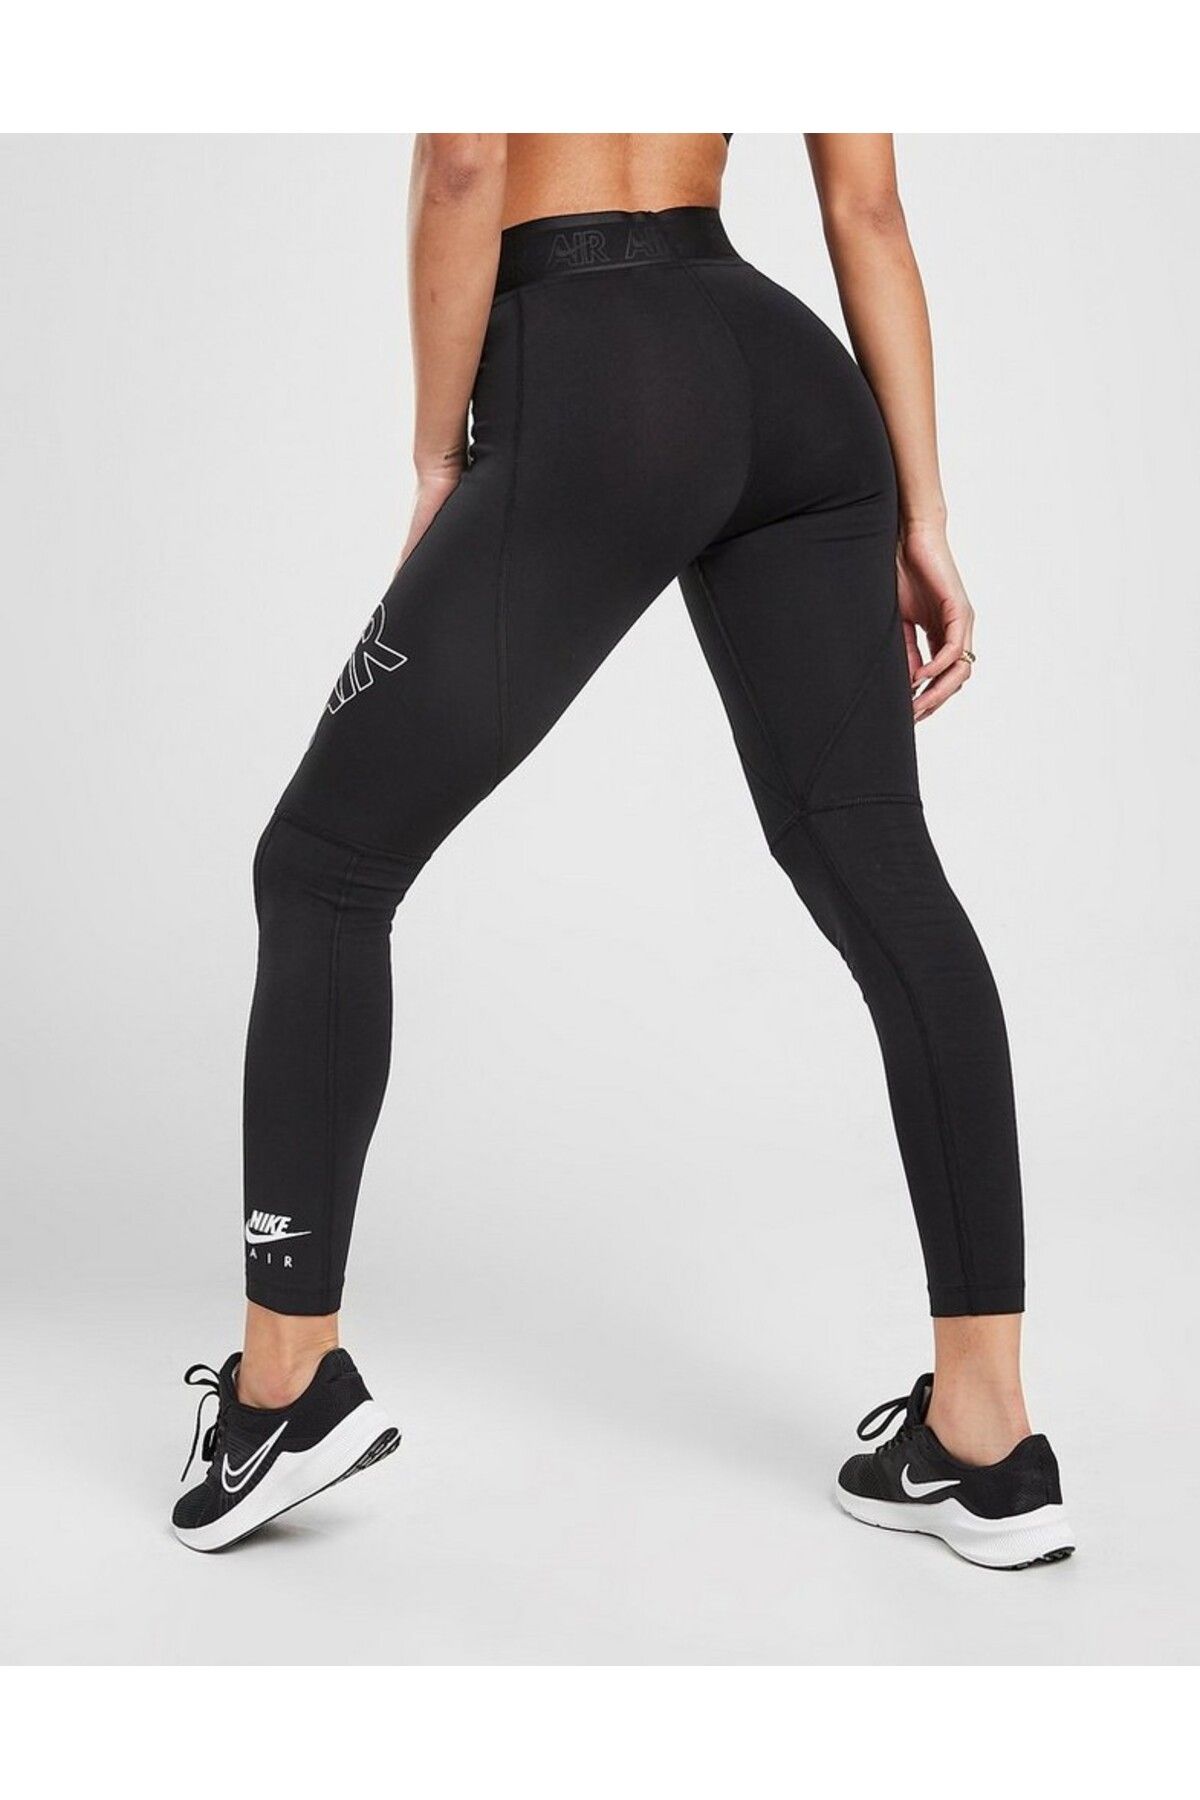 Nike Air Yüksek Belli 7/8 Grafikli Siyah Kadın Taytı